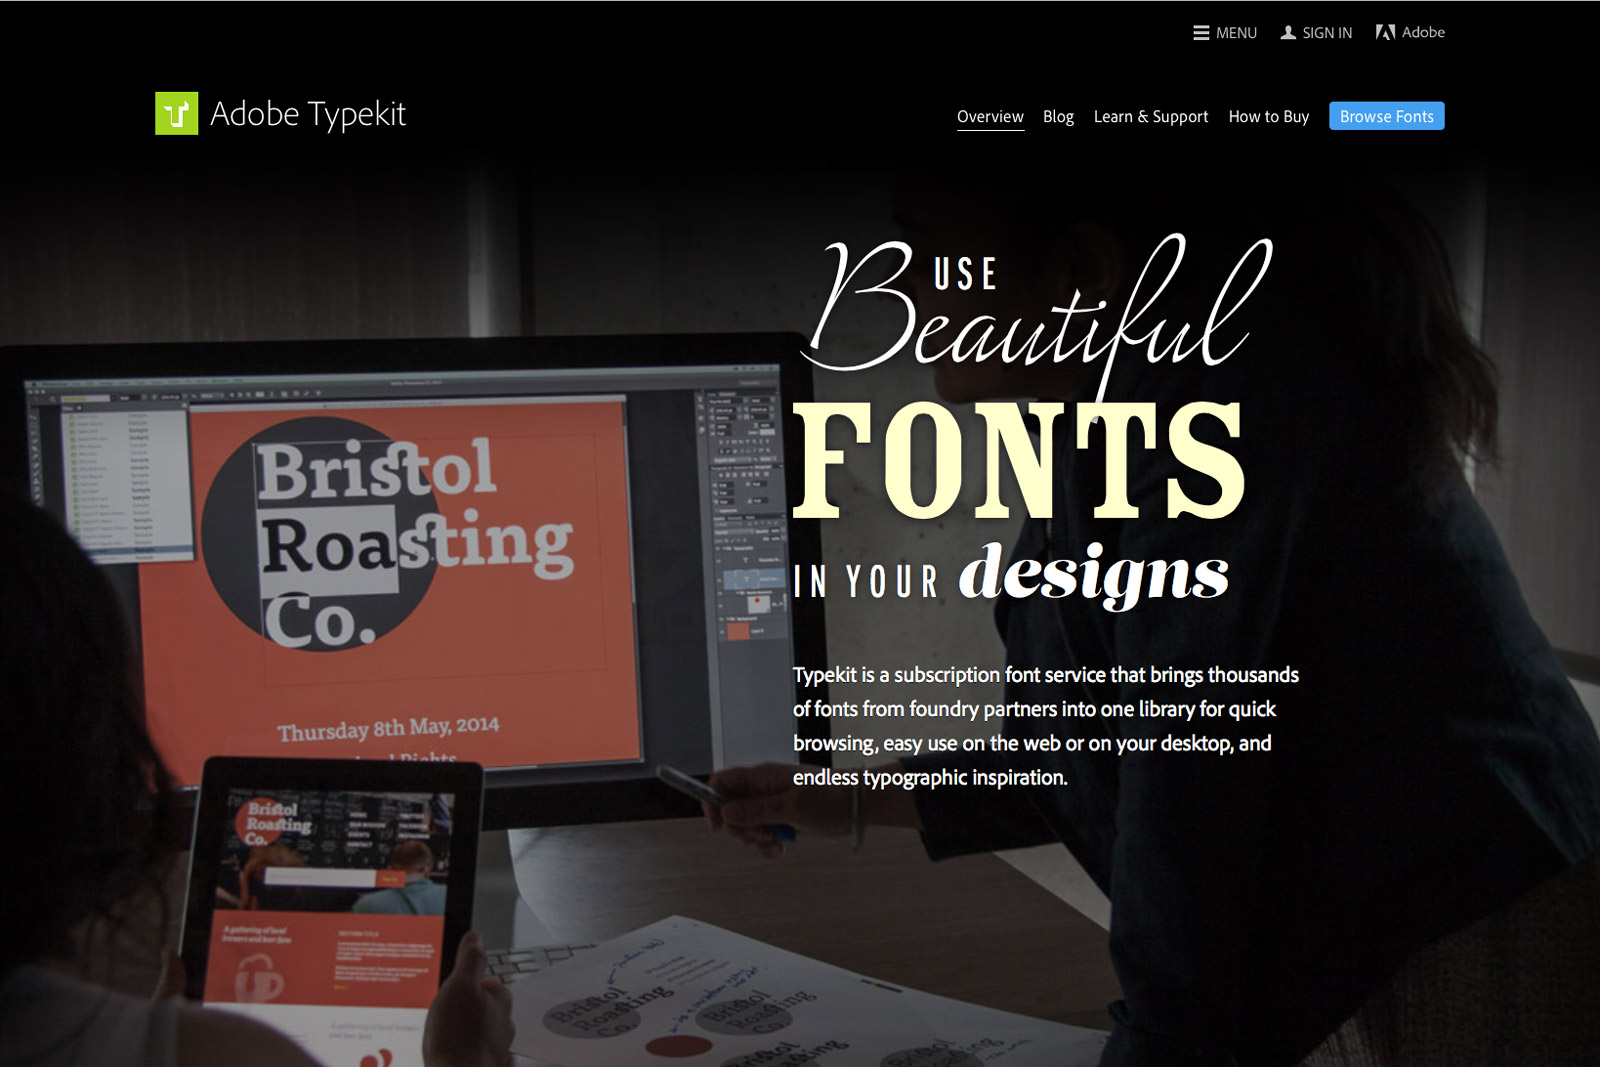 Adobe Typekit homepage